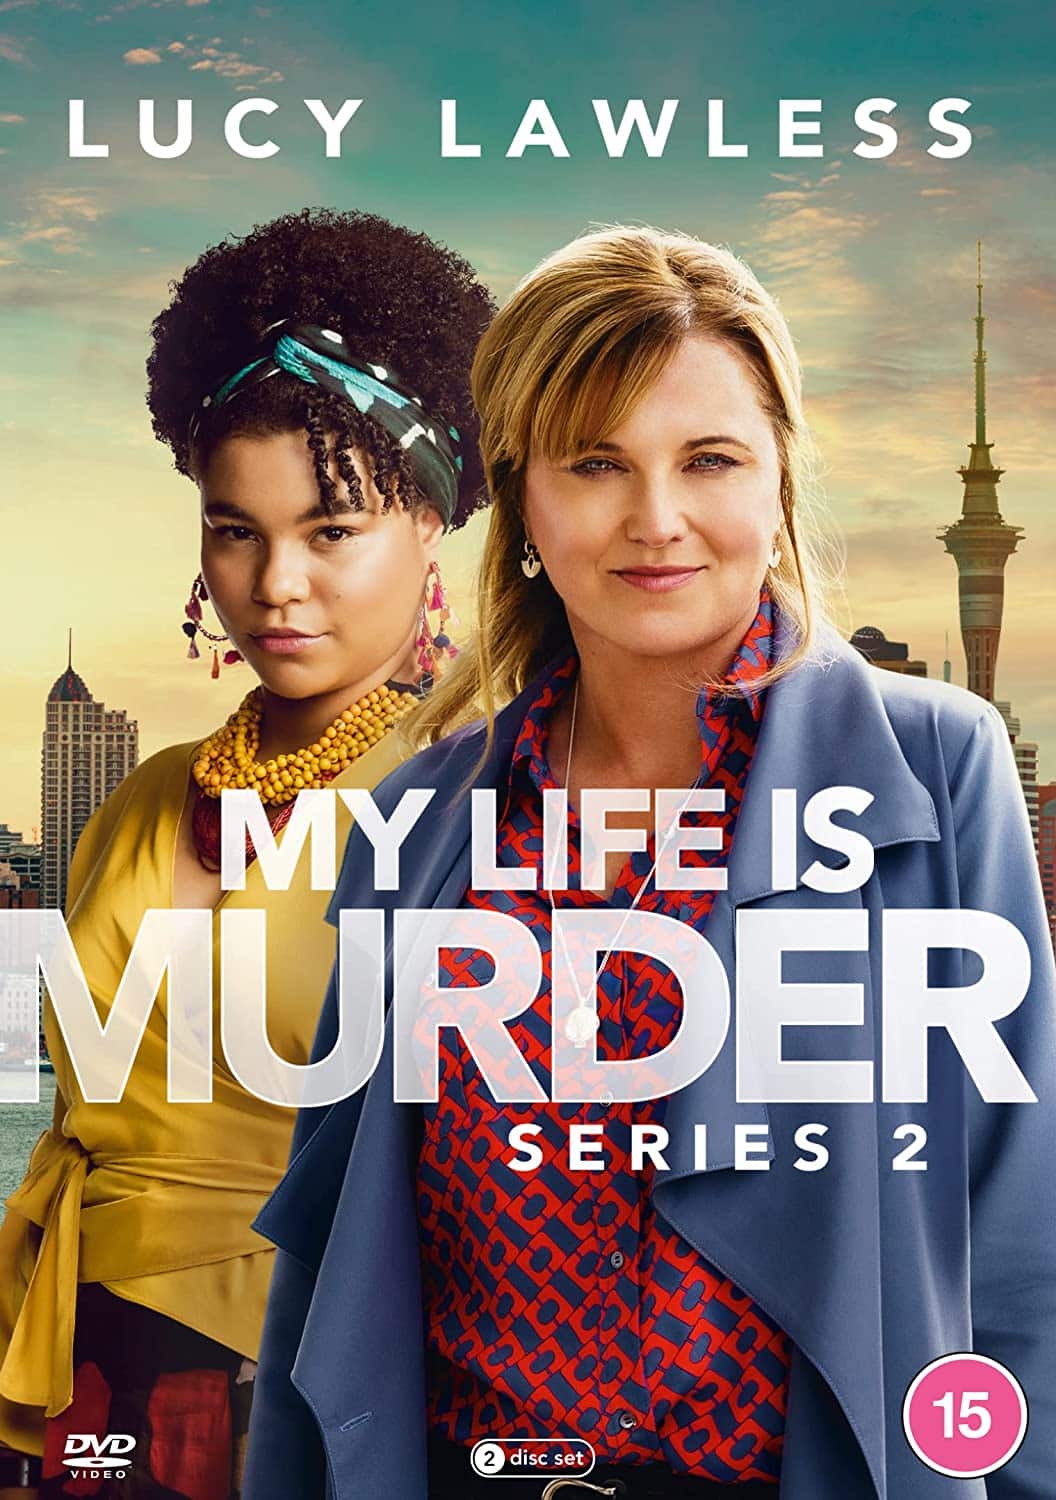 GAGNEZ "My Life Is Murder : Série 2" sur DVD 3